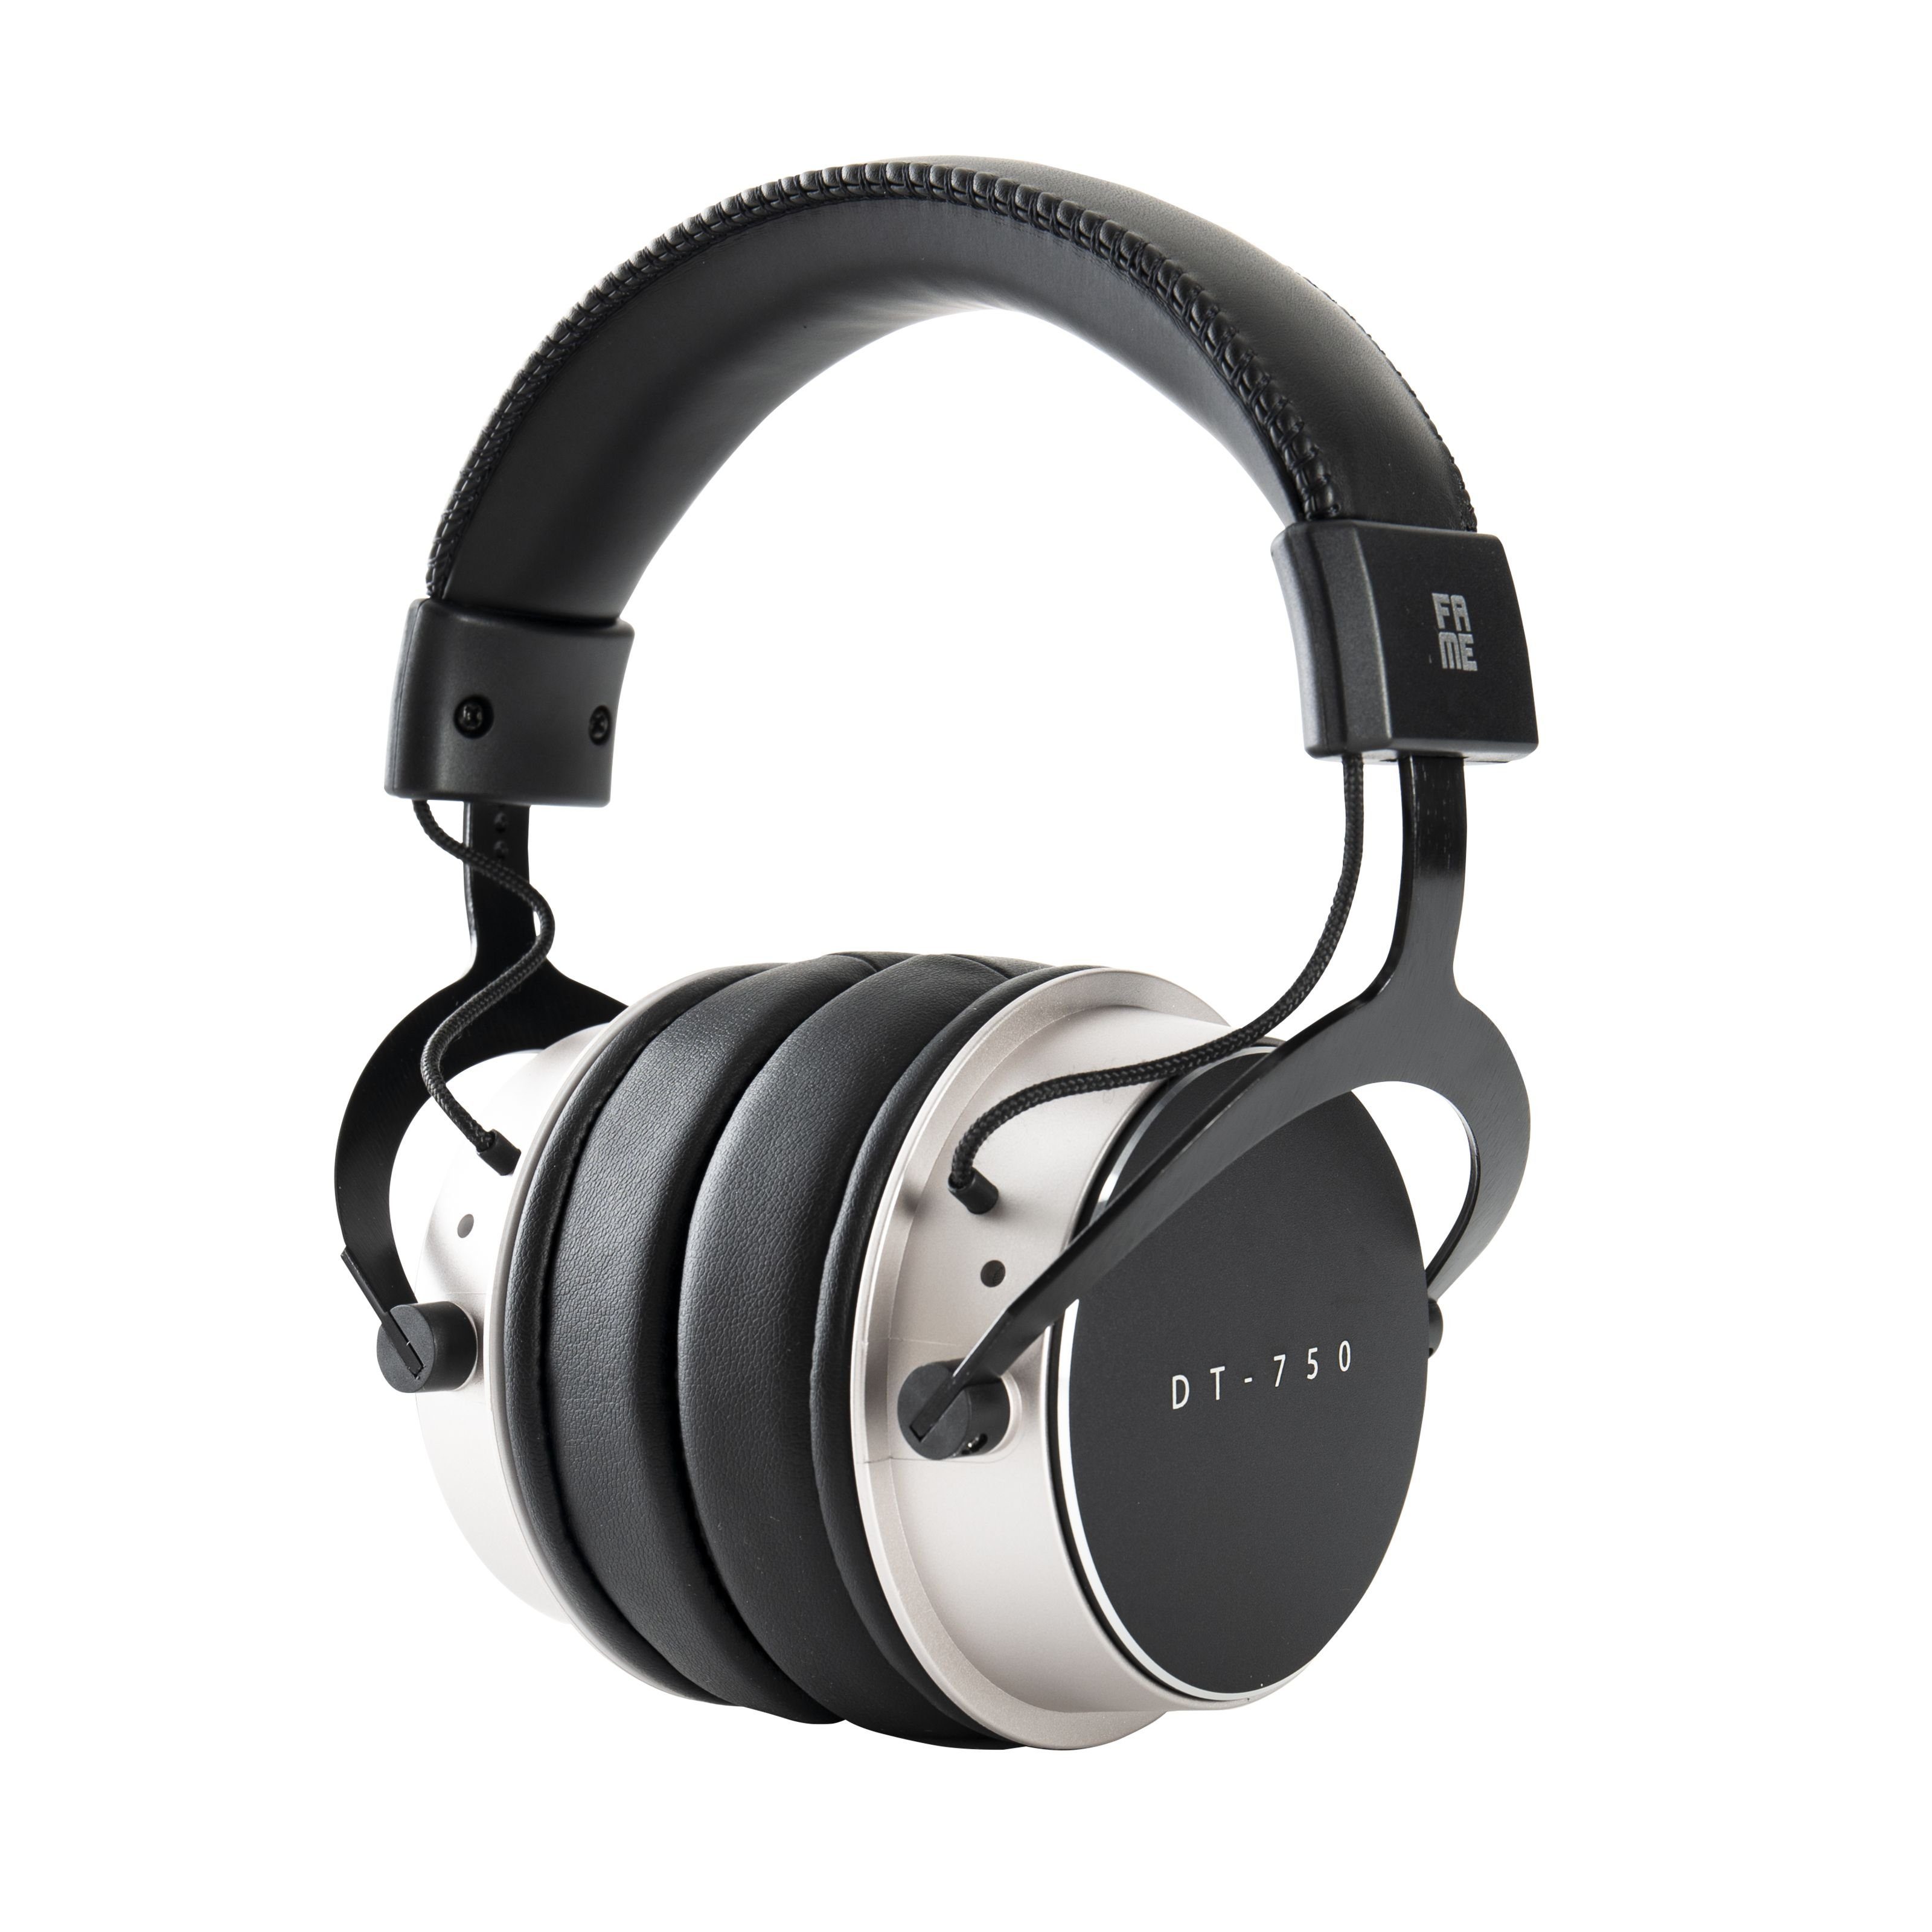 Fame Audio Kopfhörer (DT-750 Studio Kabel) mit geschlossen abnehmbaren Kopfhörer, Kopfhörer